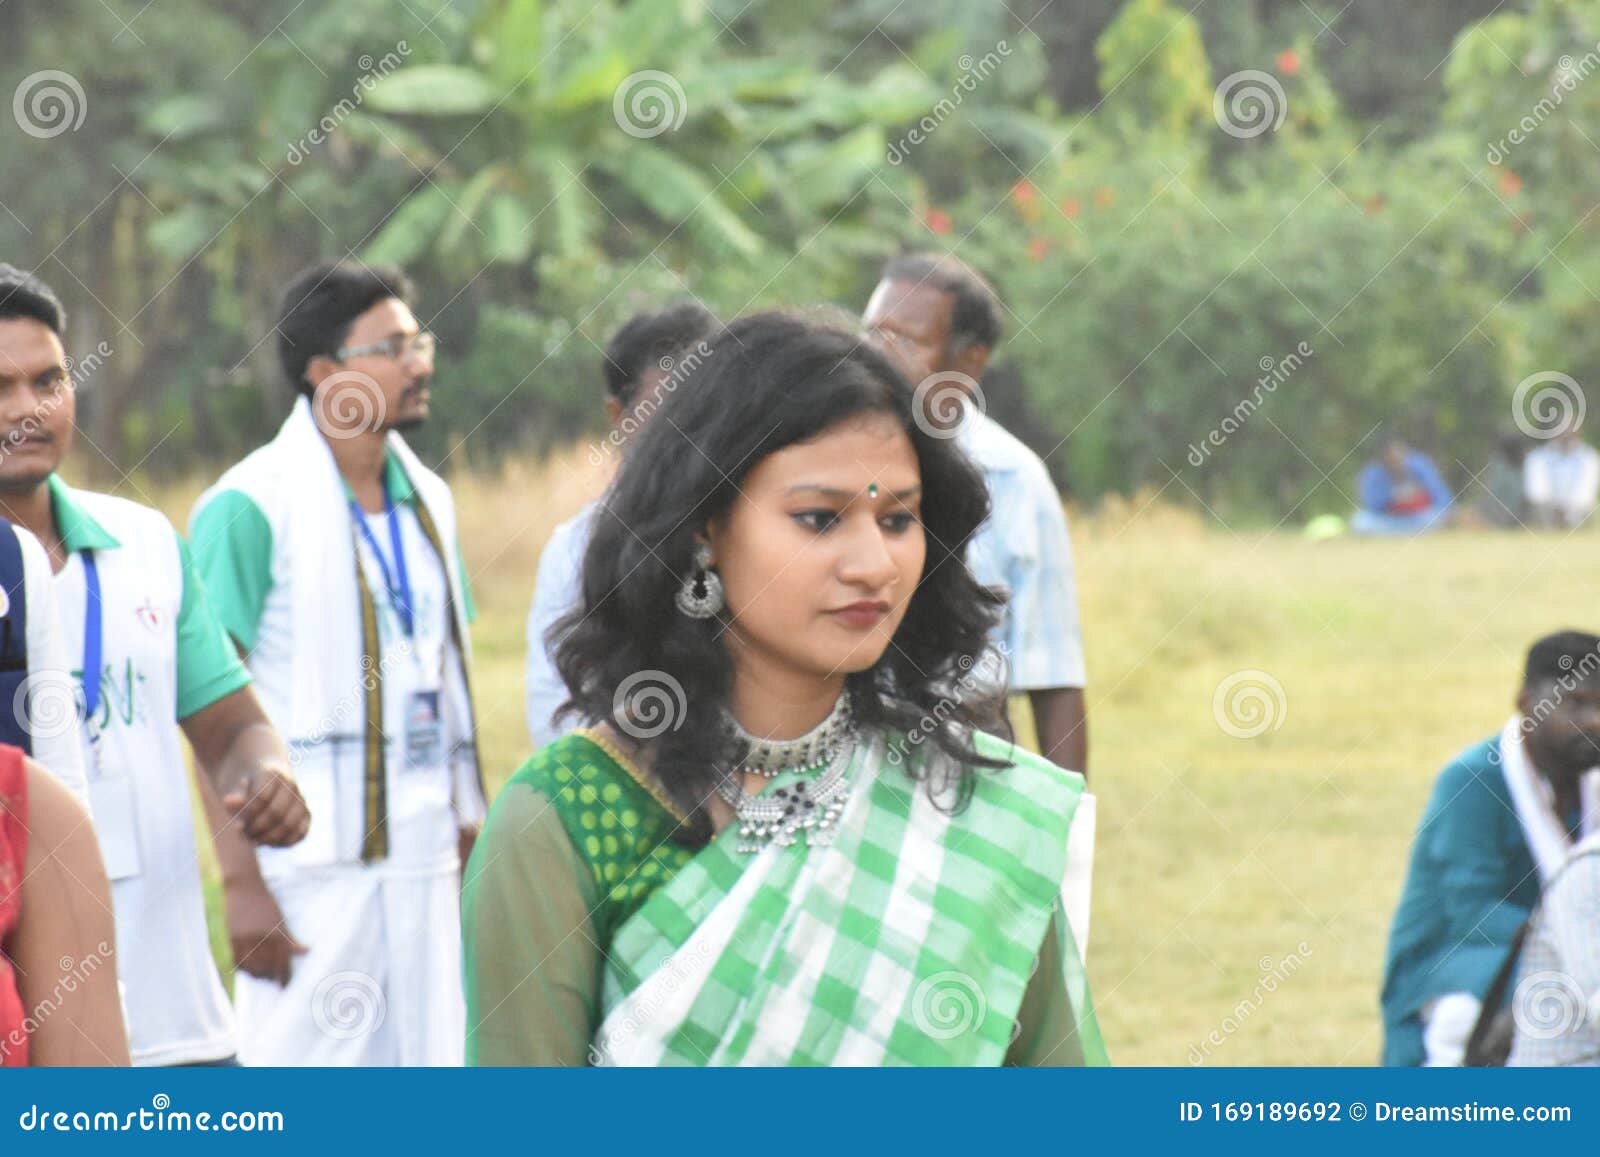 Assam: Bihu Festival to Get International Exposure